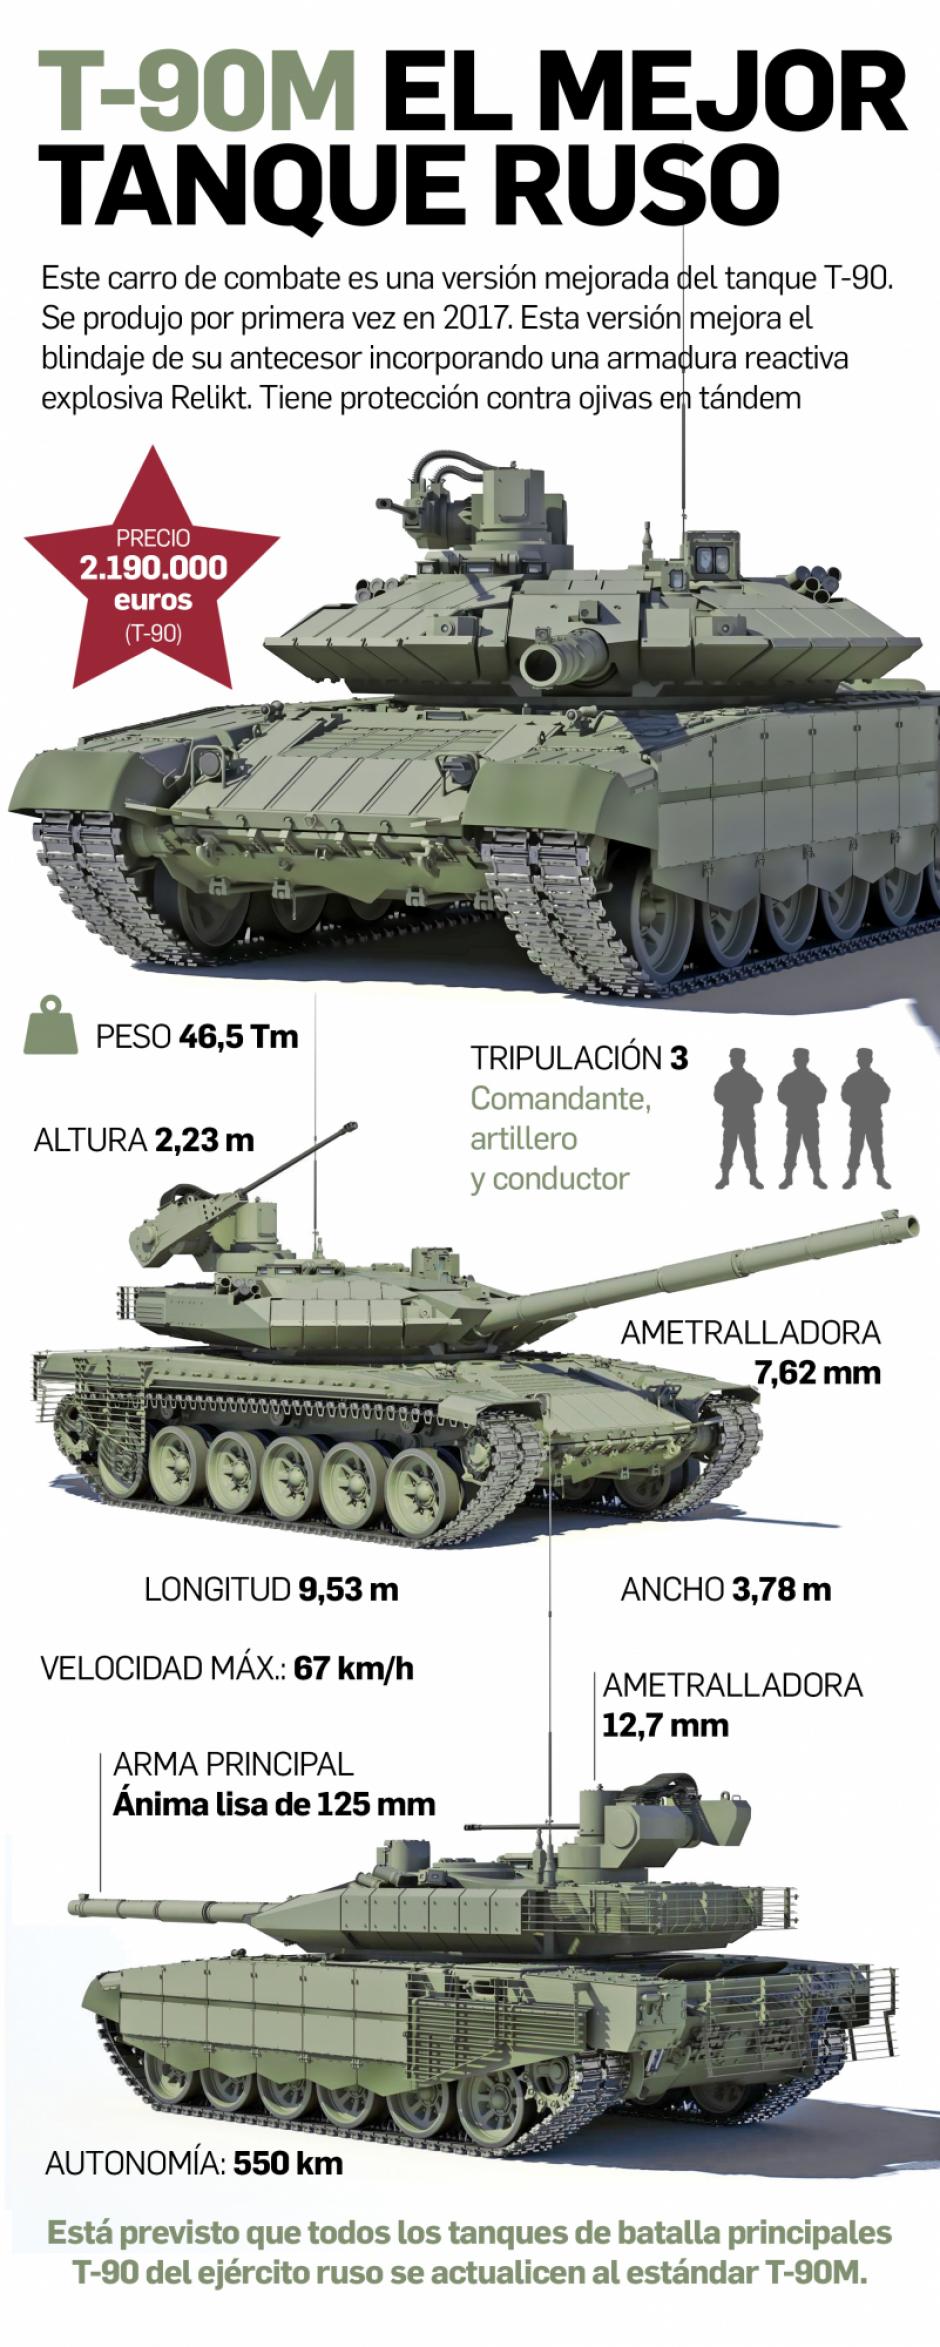 Características del tanque ruso T-90M